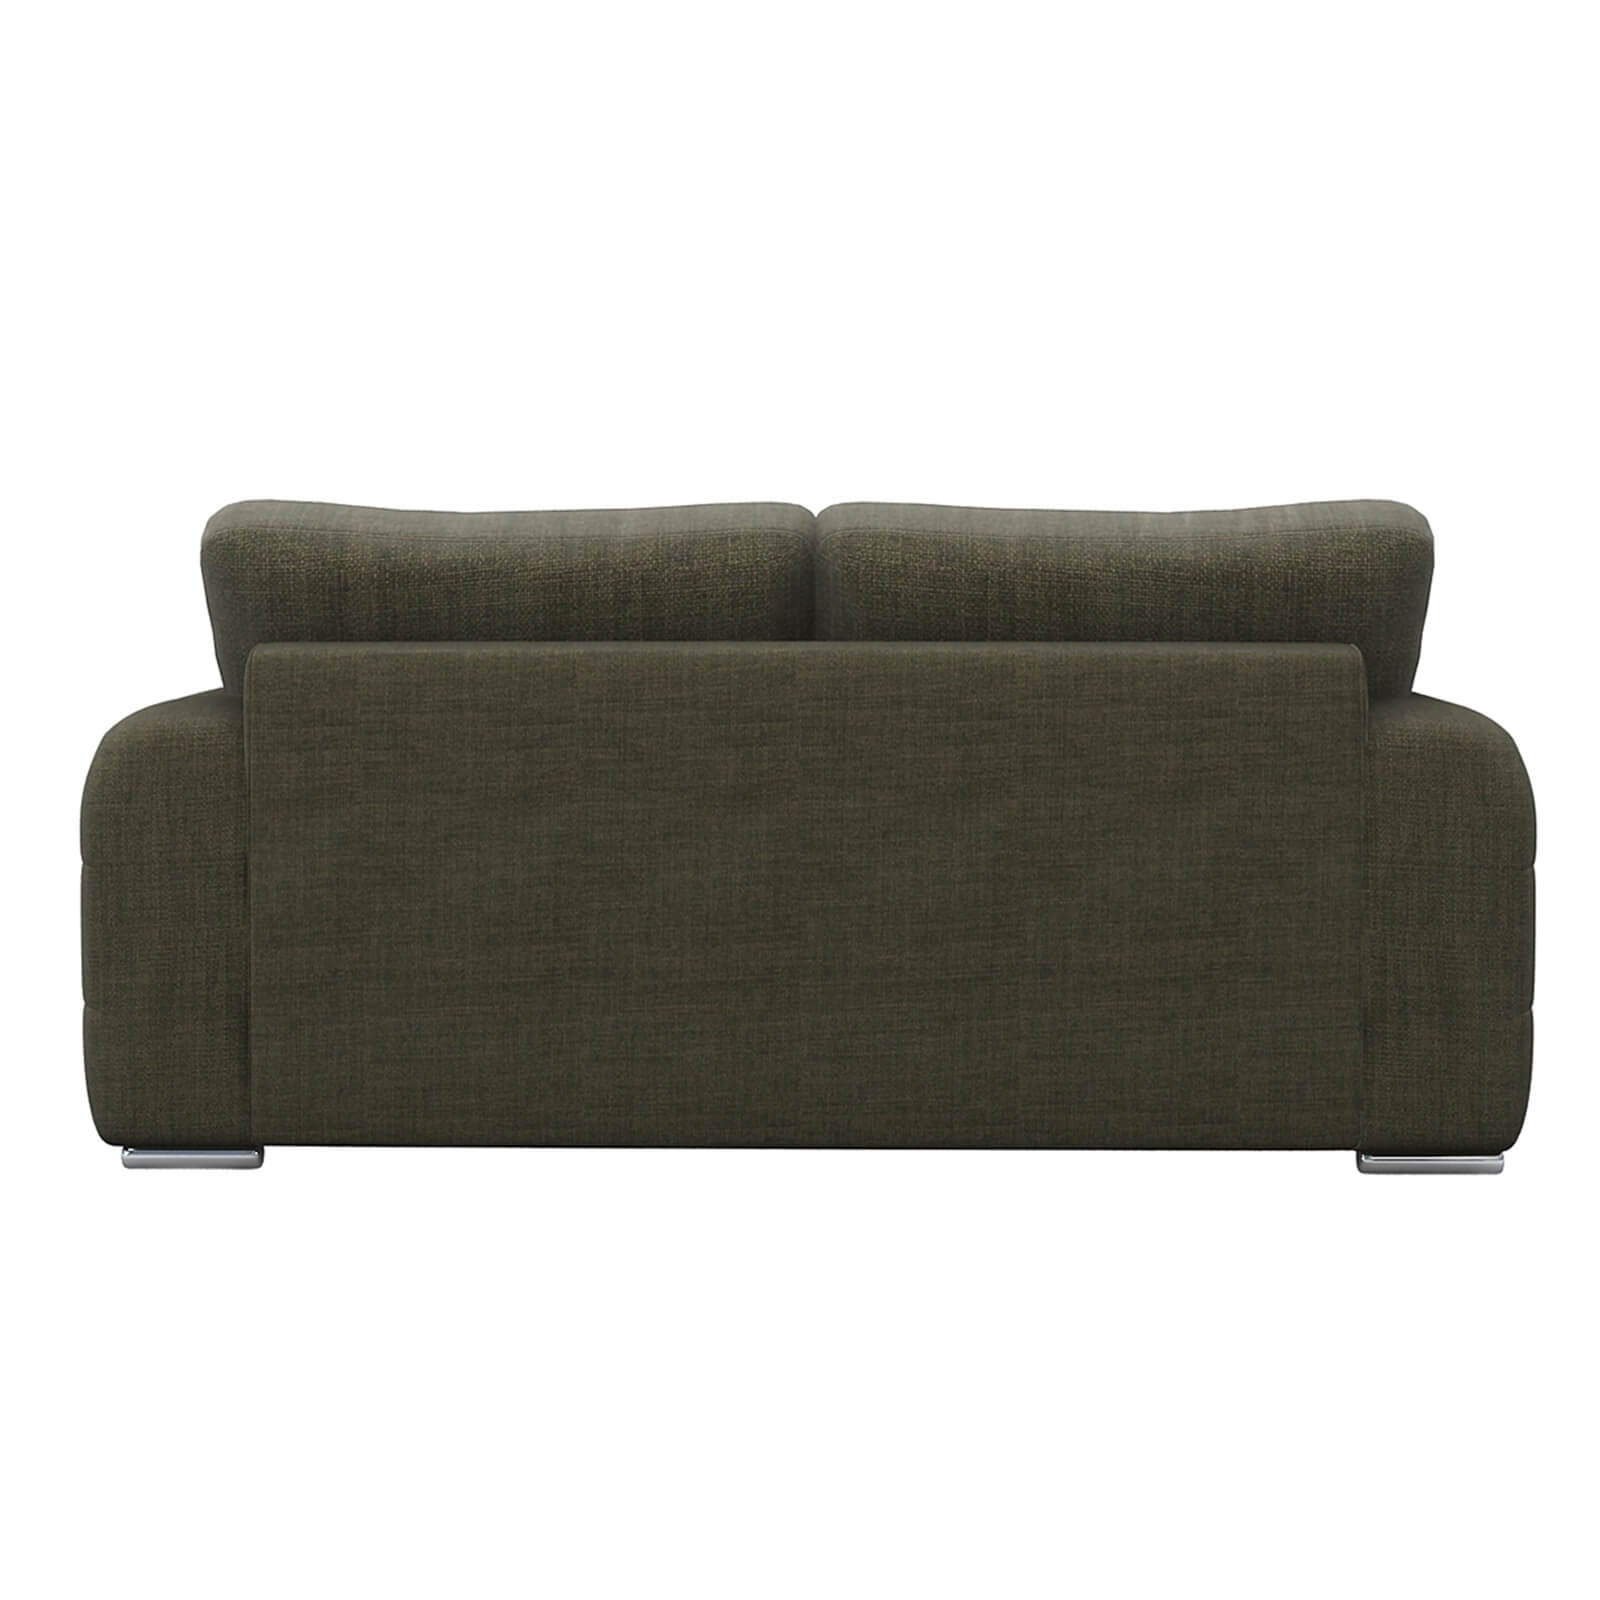 Amethyst 2 Seater Sofa - Brown